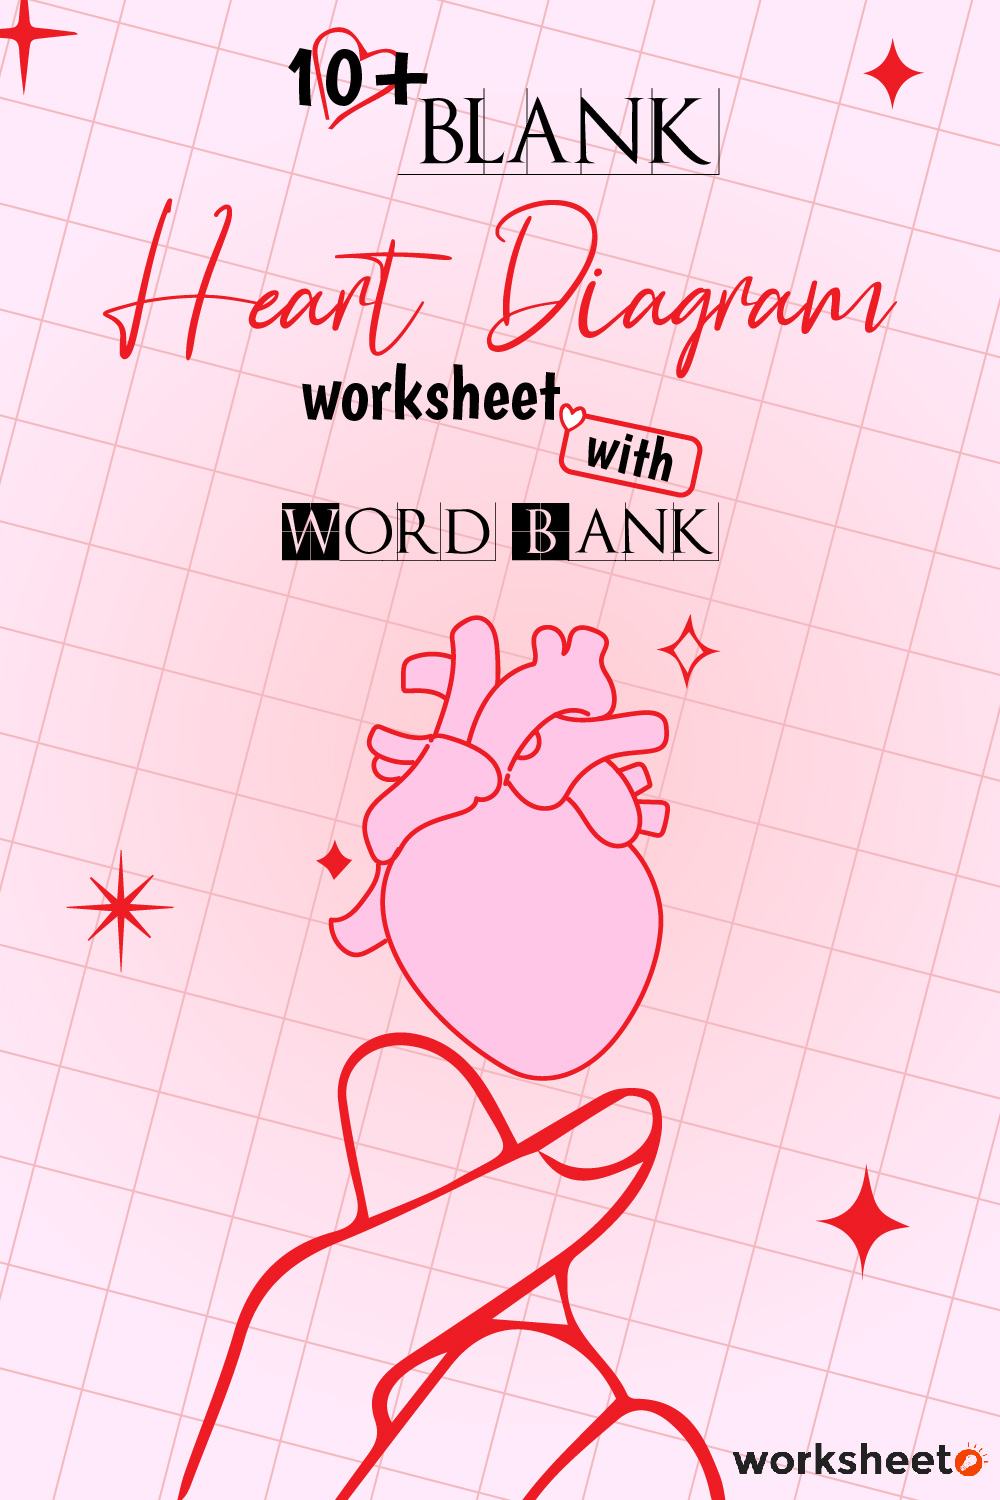 Blank Heart Diagram Worksheet with Word Bank